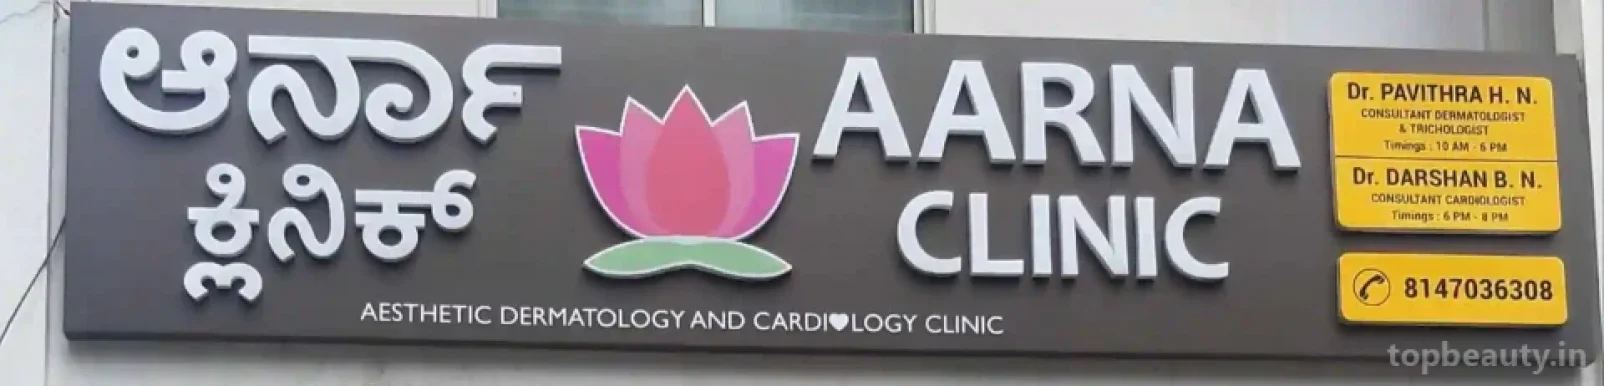 Aarna Aesthetic Dermatology and Cardiology Clinic, Bangalore - Photo 2